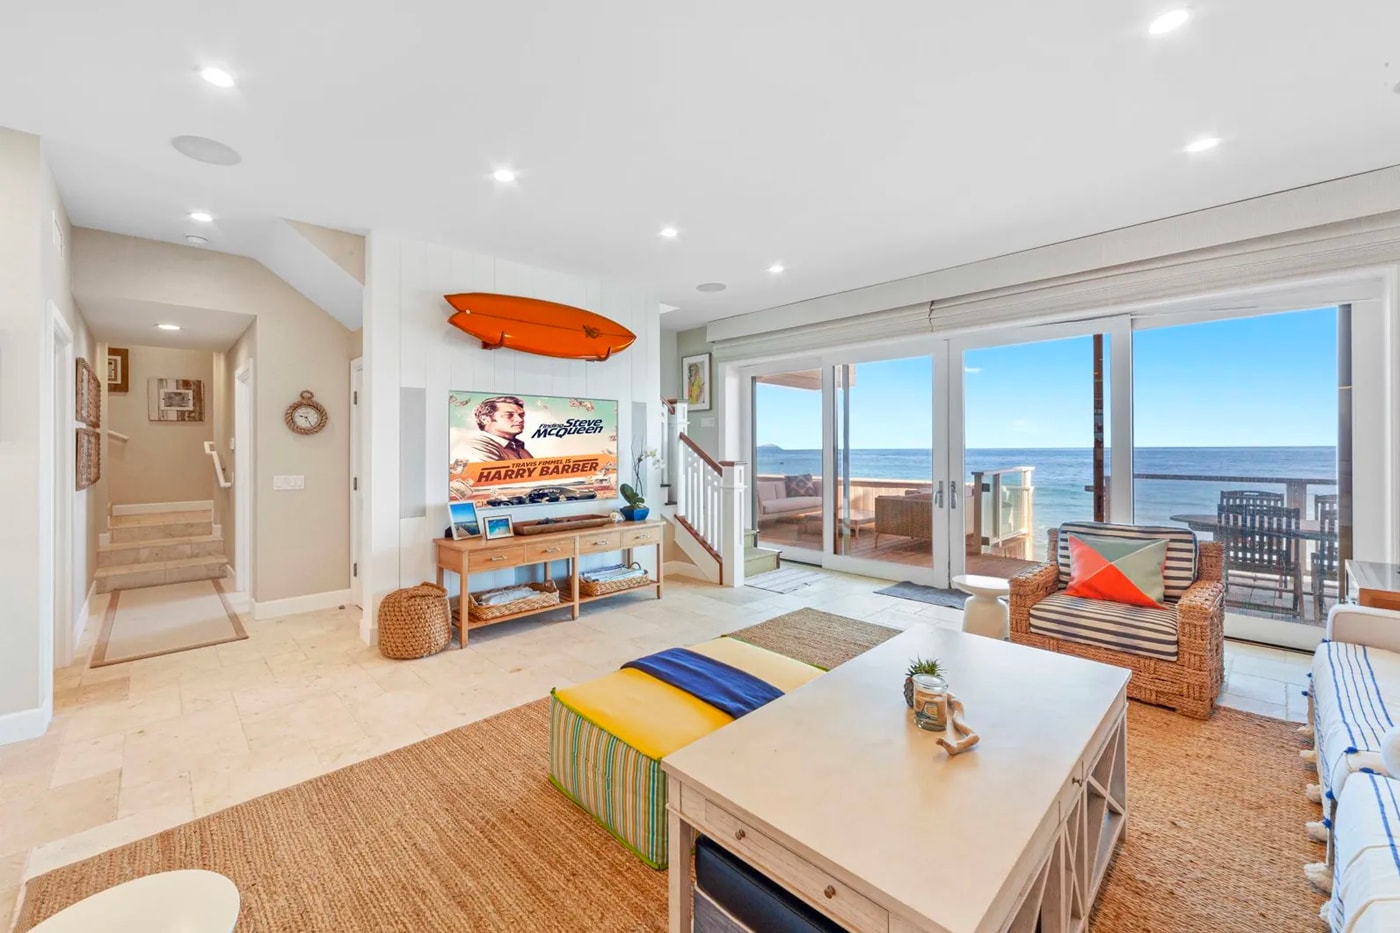 Steve McQueen Malibu Beach Home Sothebys International Realty listing beachfront Trancas homes design architecture 